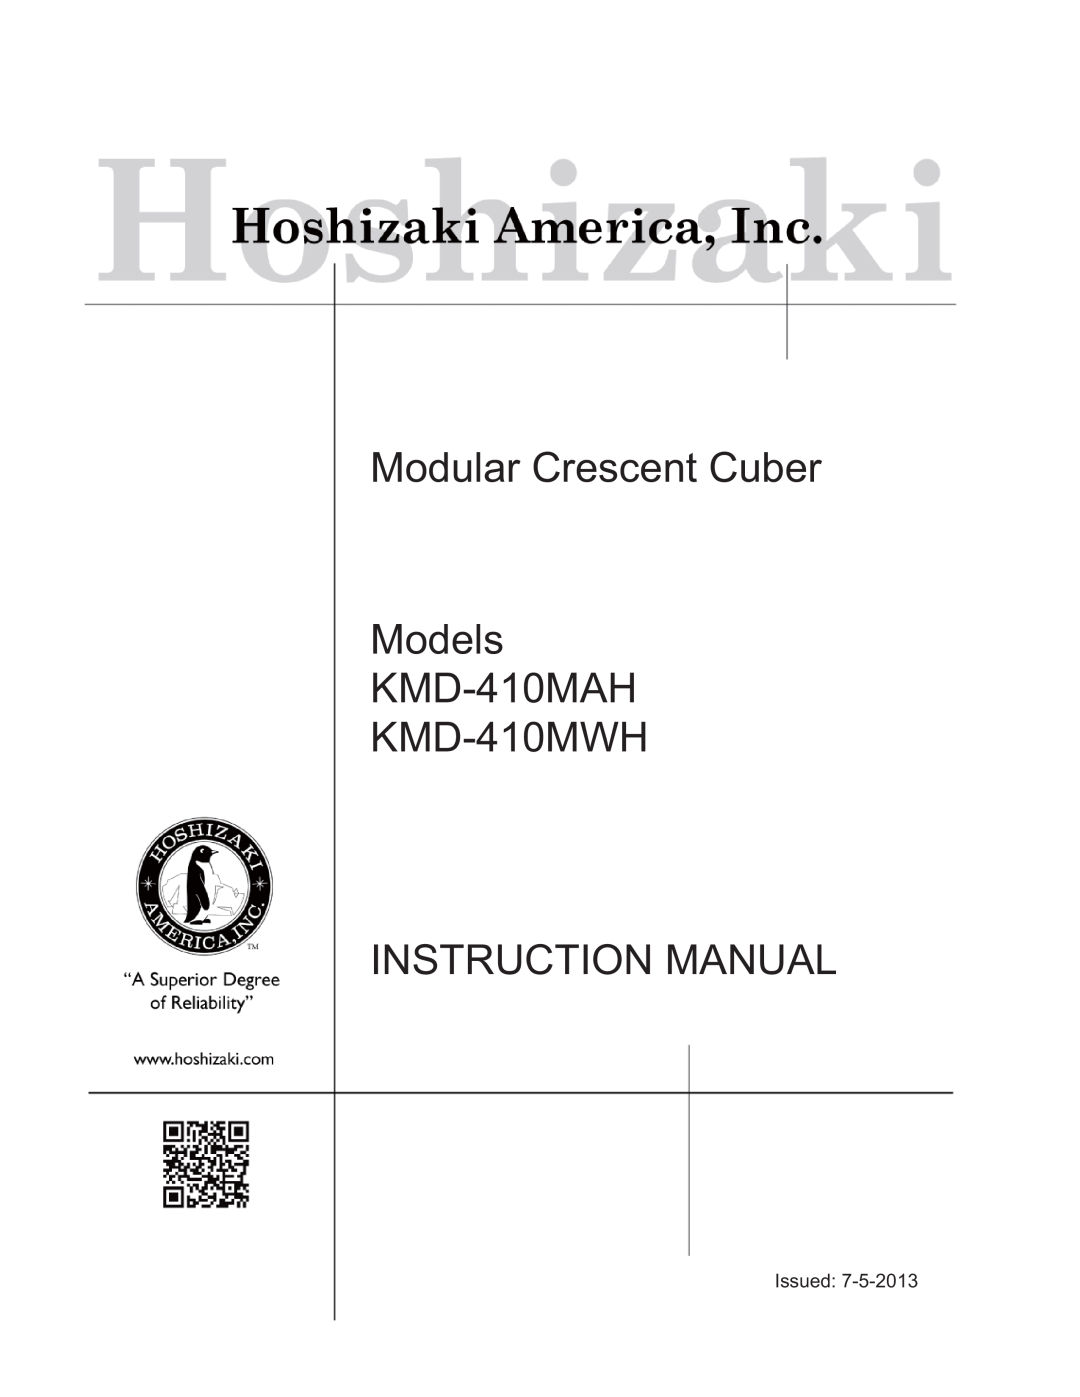 Hoshizaki instruction manual Modular Crescent Cuber Models KMD-410MAH KMD-410MWH, Issued 